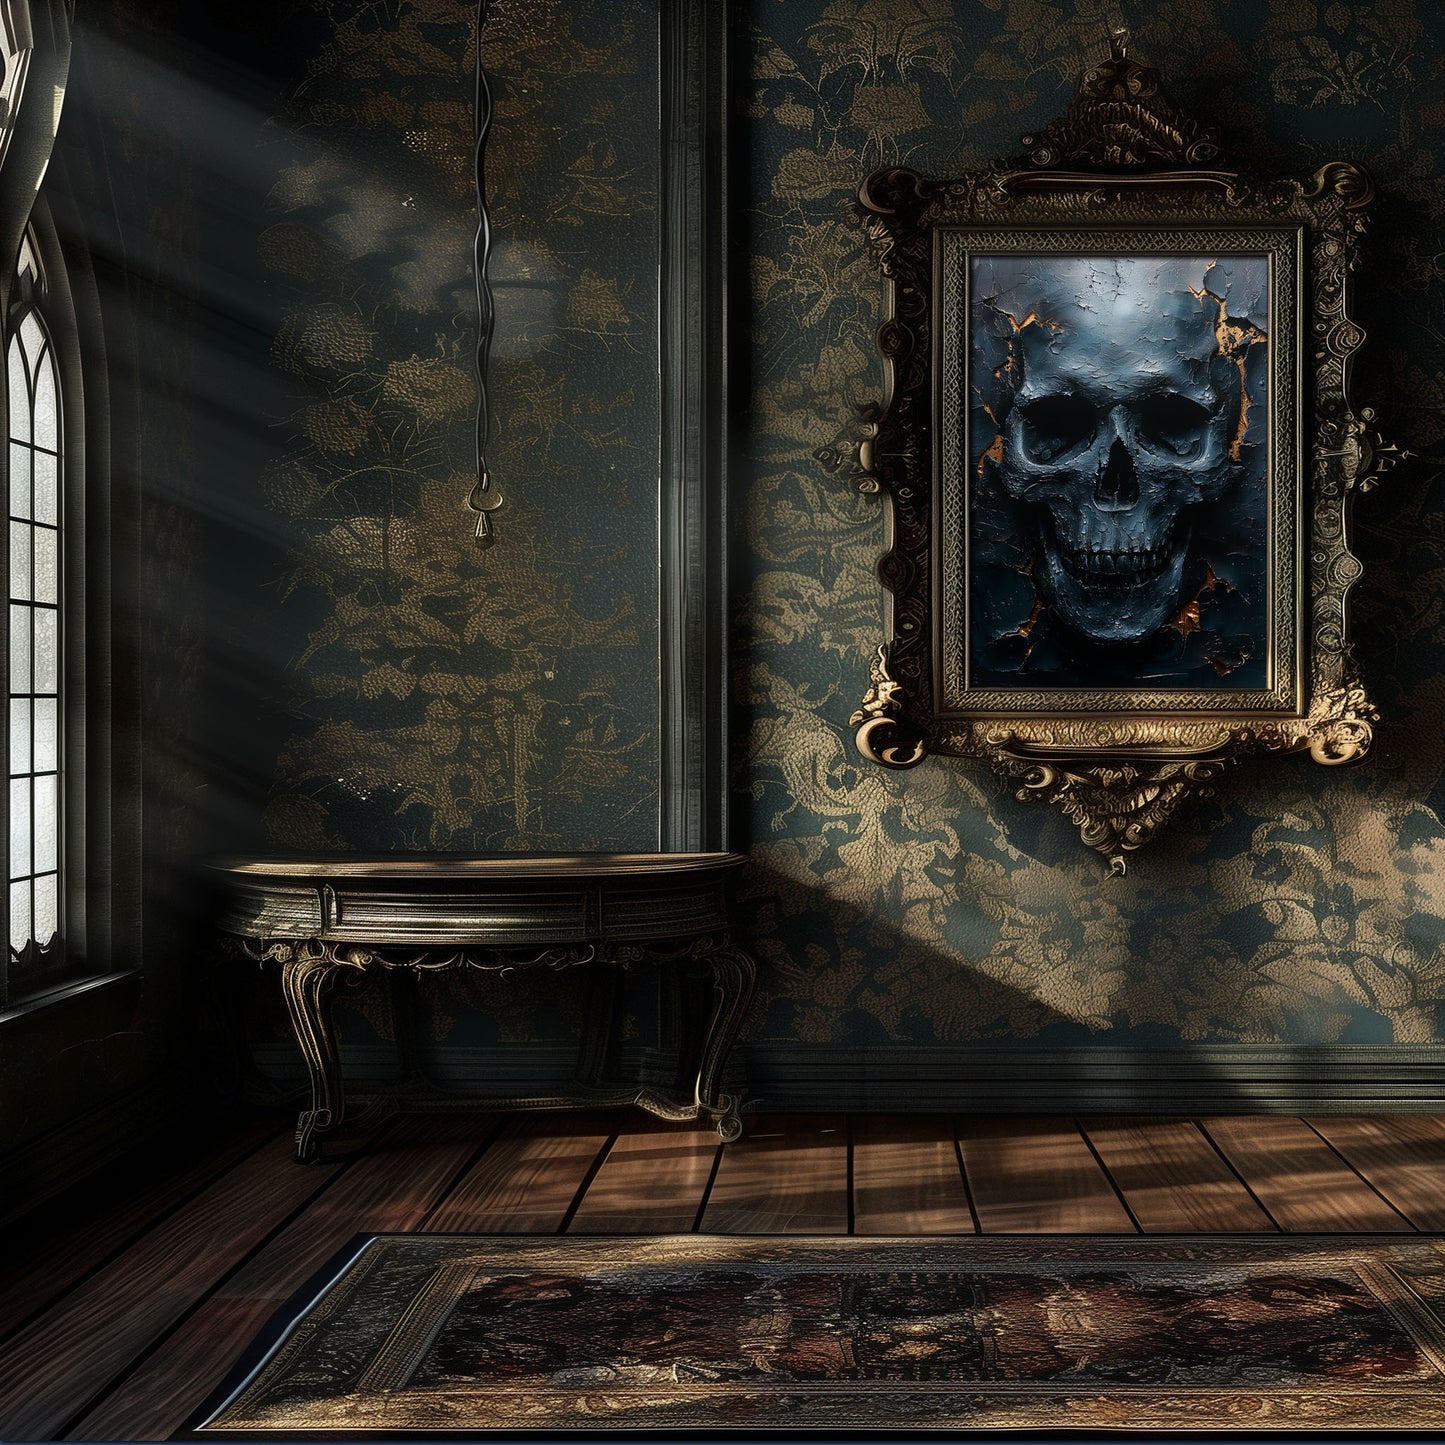 Eerie Dark Blue Skull Painting - Haunting Wall Art - Creepy Home Decor